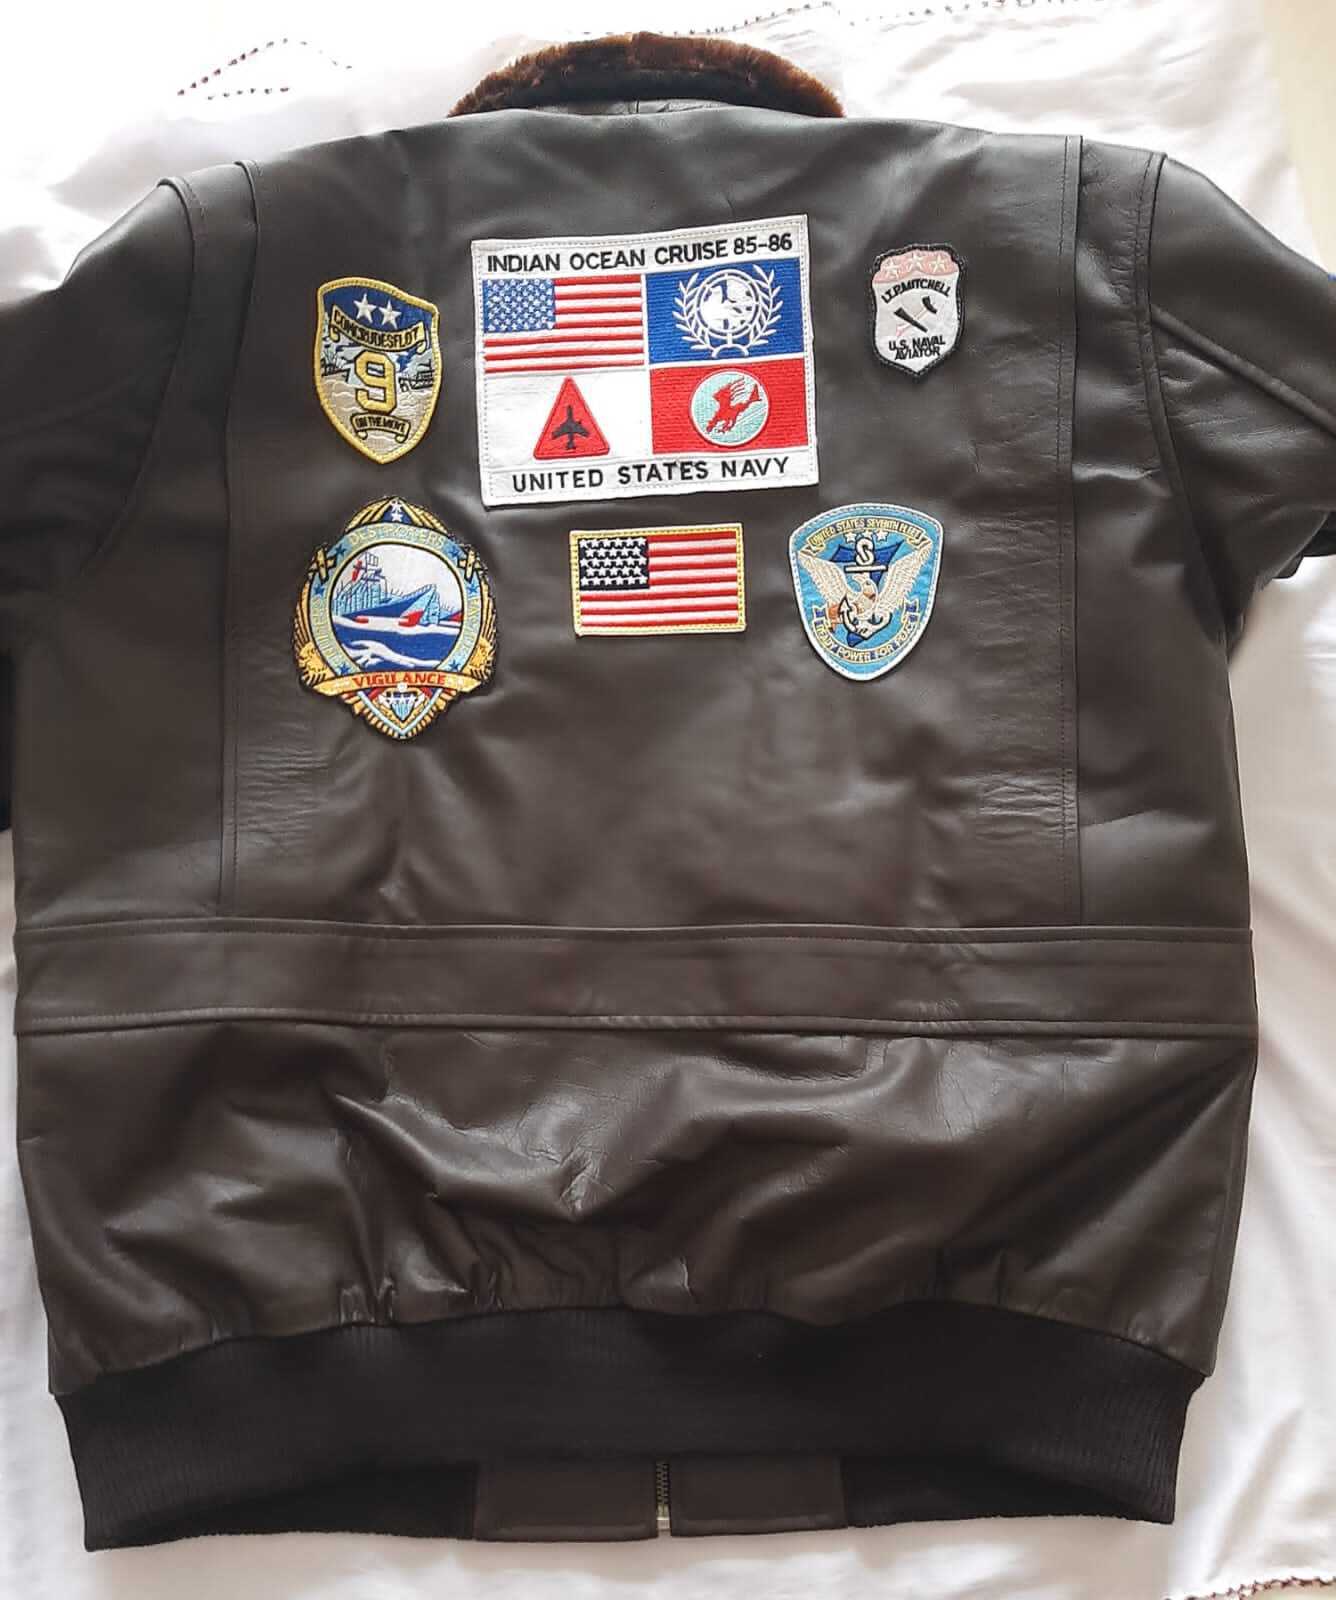 SkyMaster Maverick G1 Leather Jacket